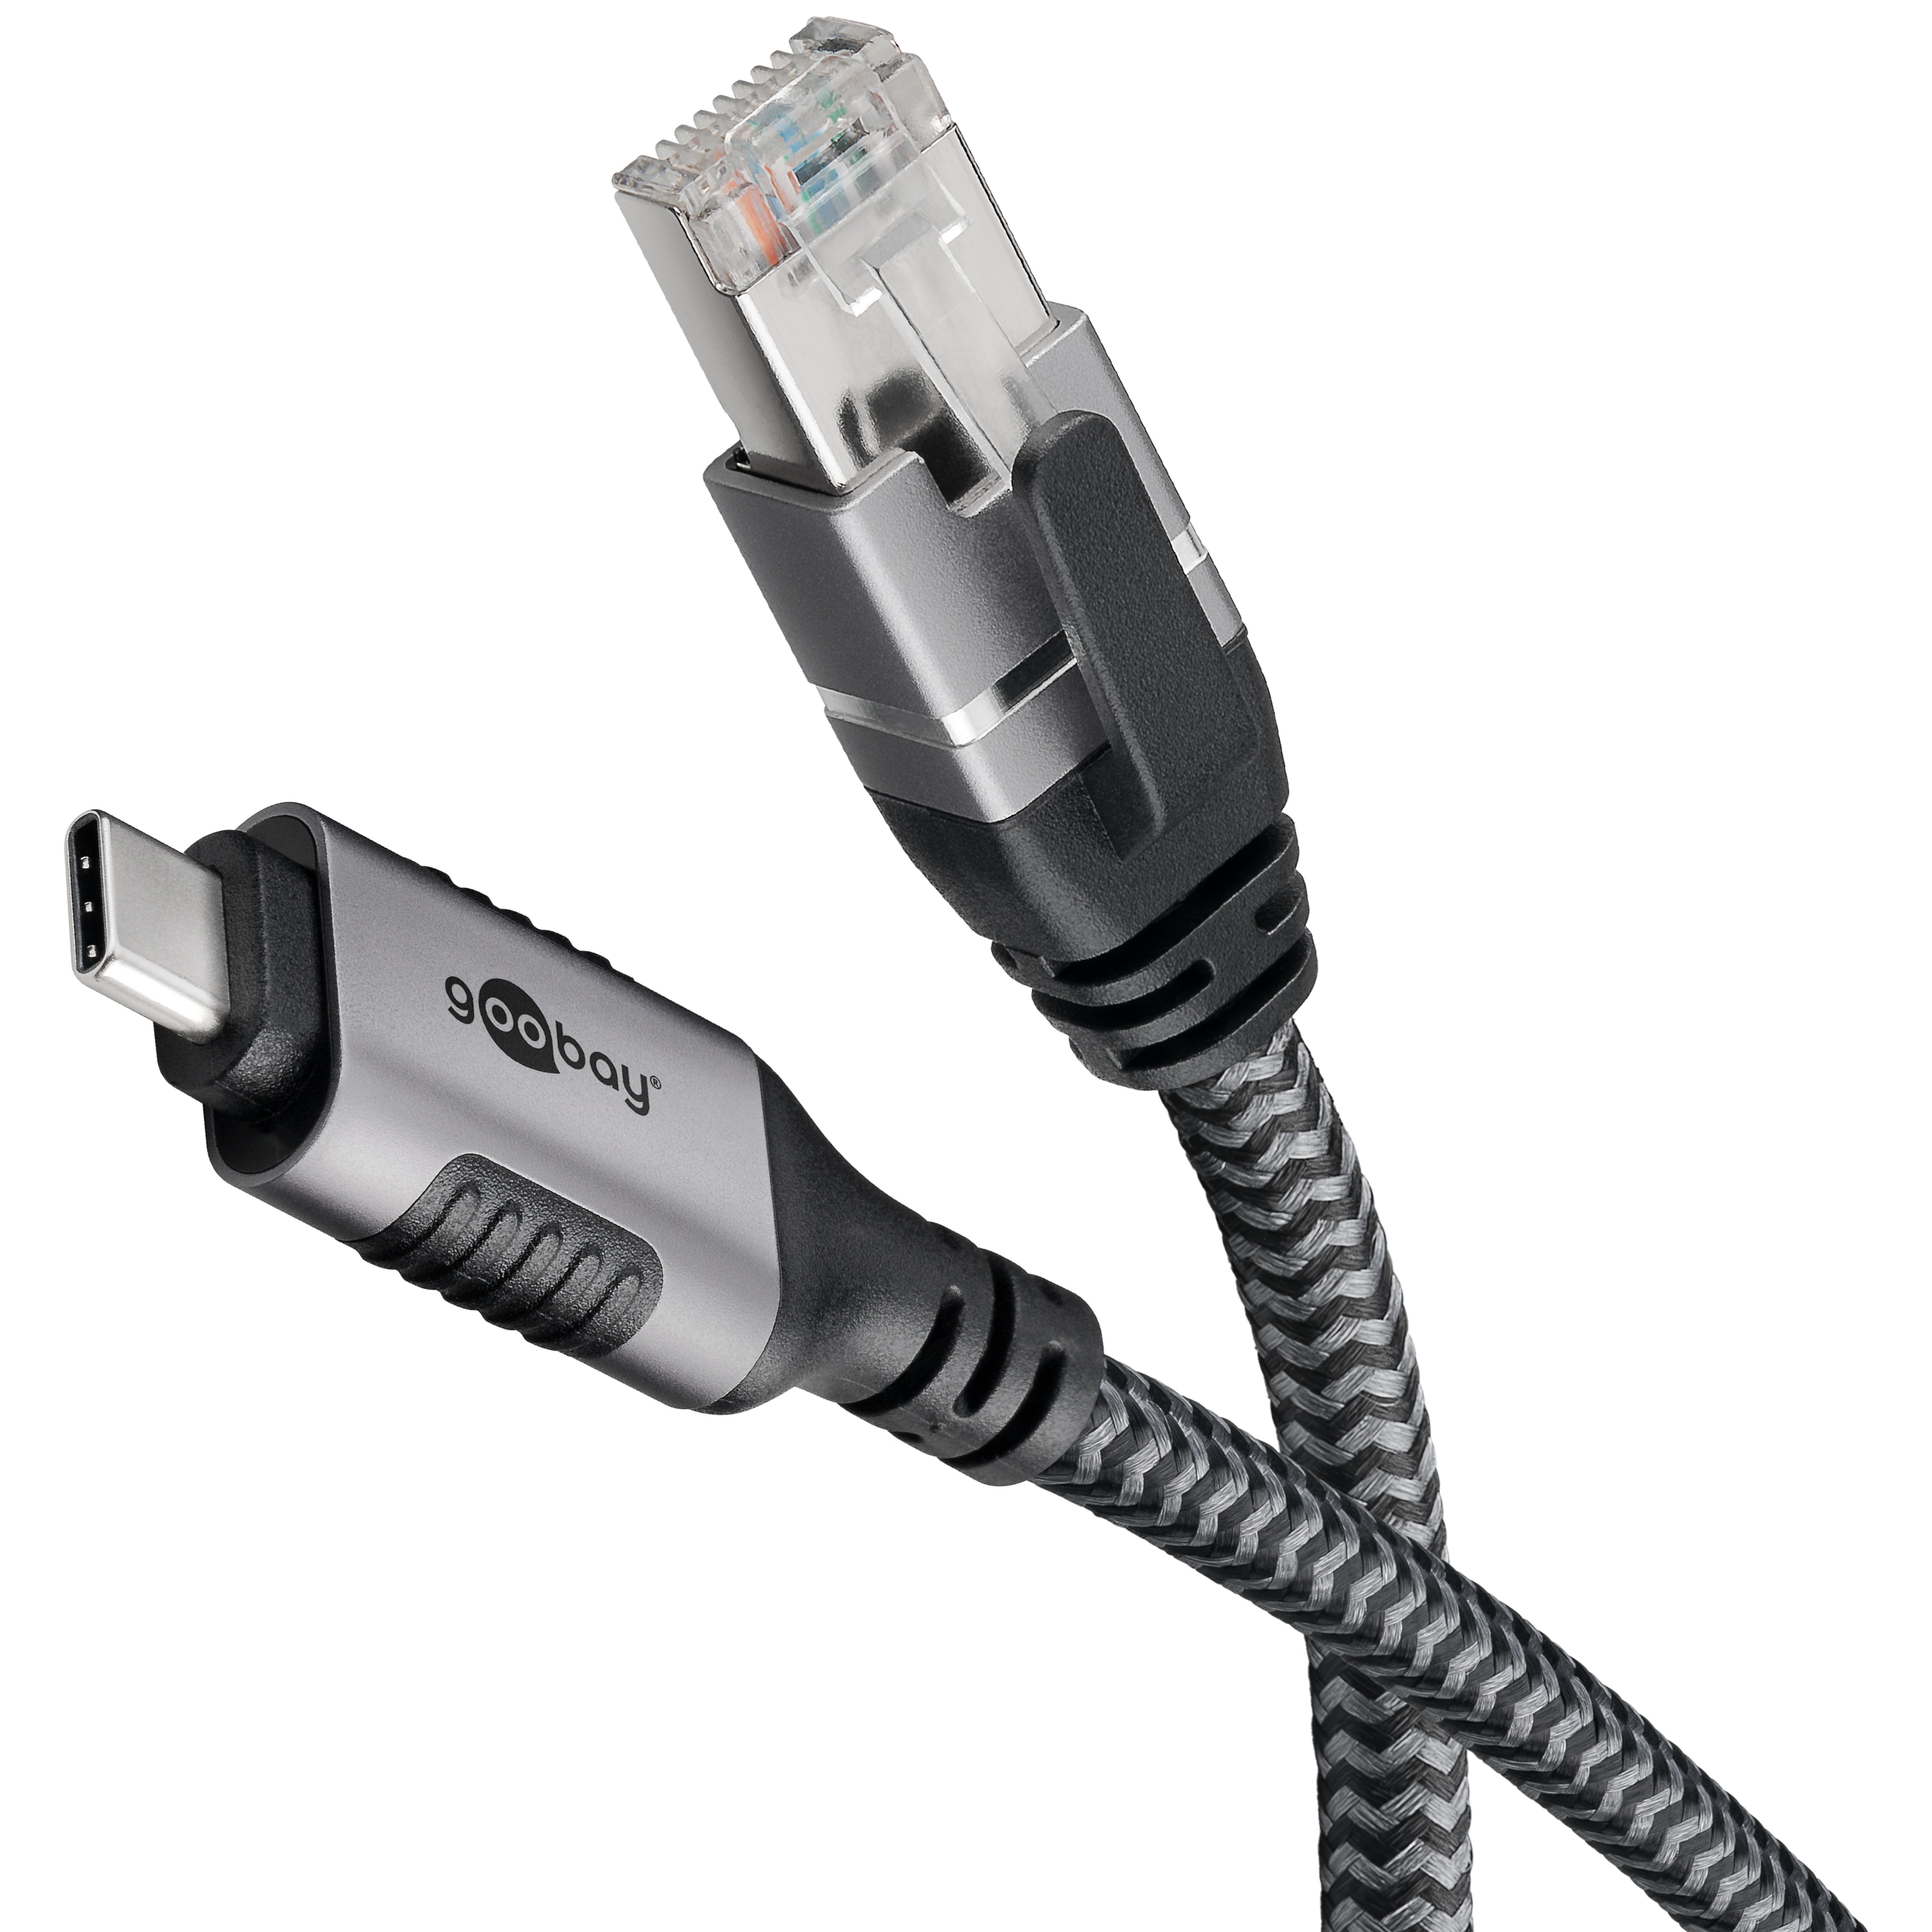 GOOBAY Ethernet-Kabel CAT6 USB-AC 3.1 auf RJ45 3m